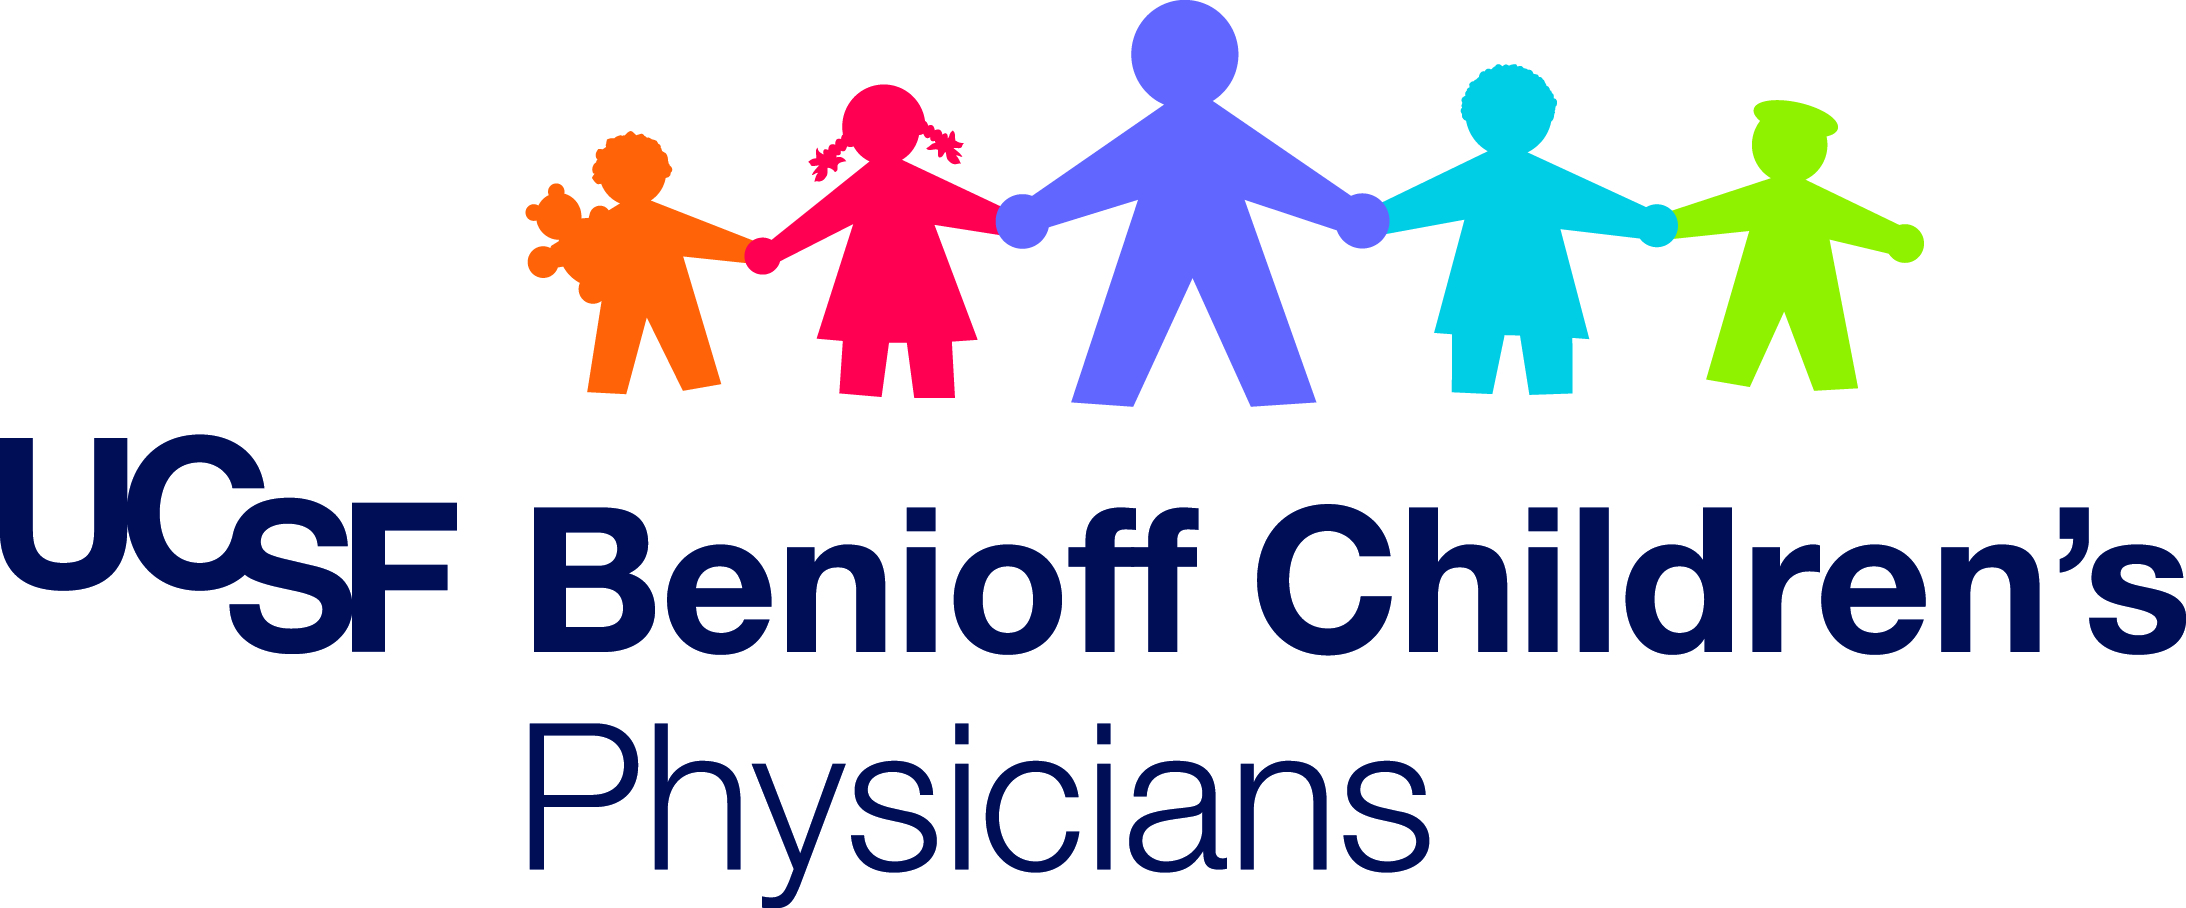 UCSF Benioff Children's Physicians